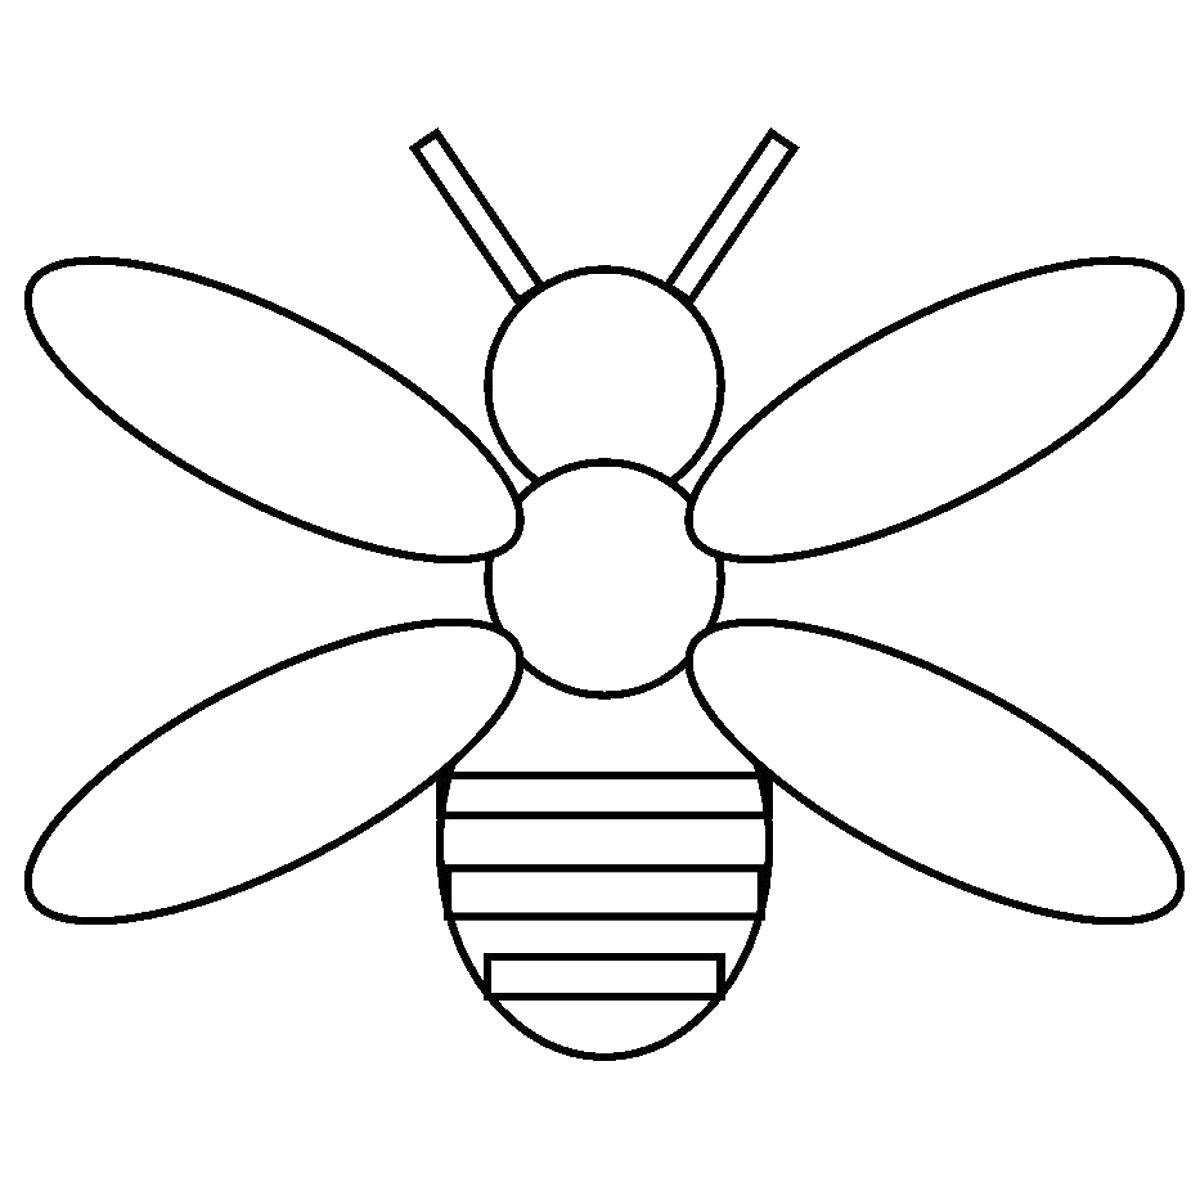 Название: Раскраска Пчёлка. Категория: простые раскраски. Теги: Пчела, мёд.